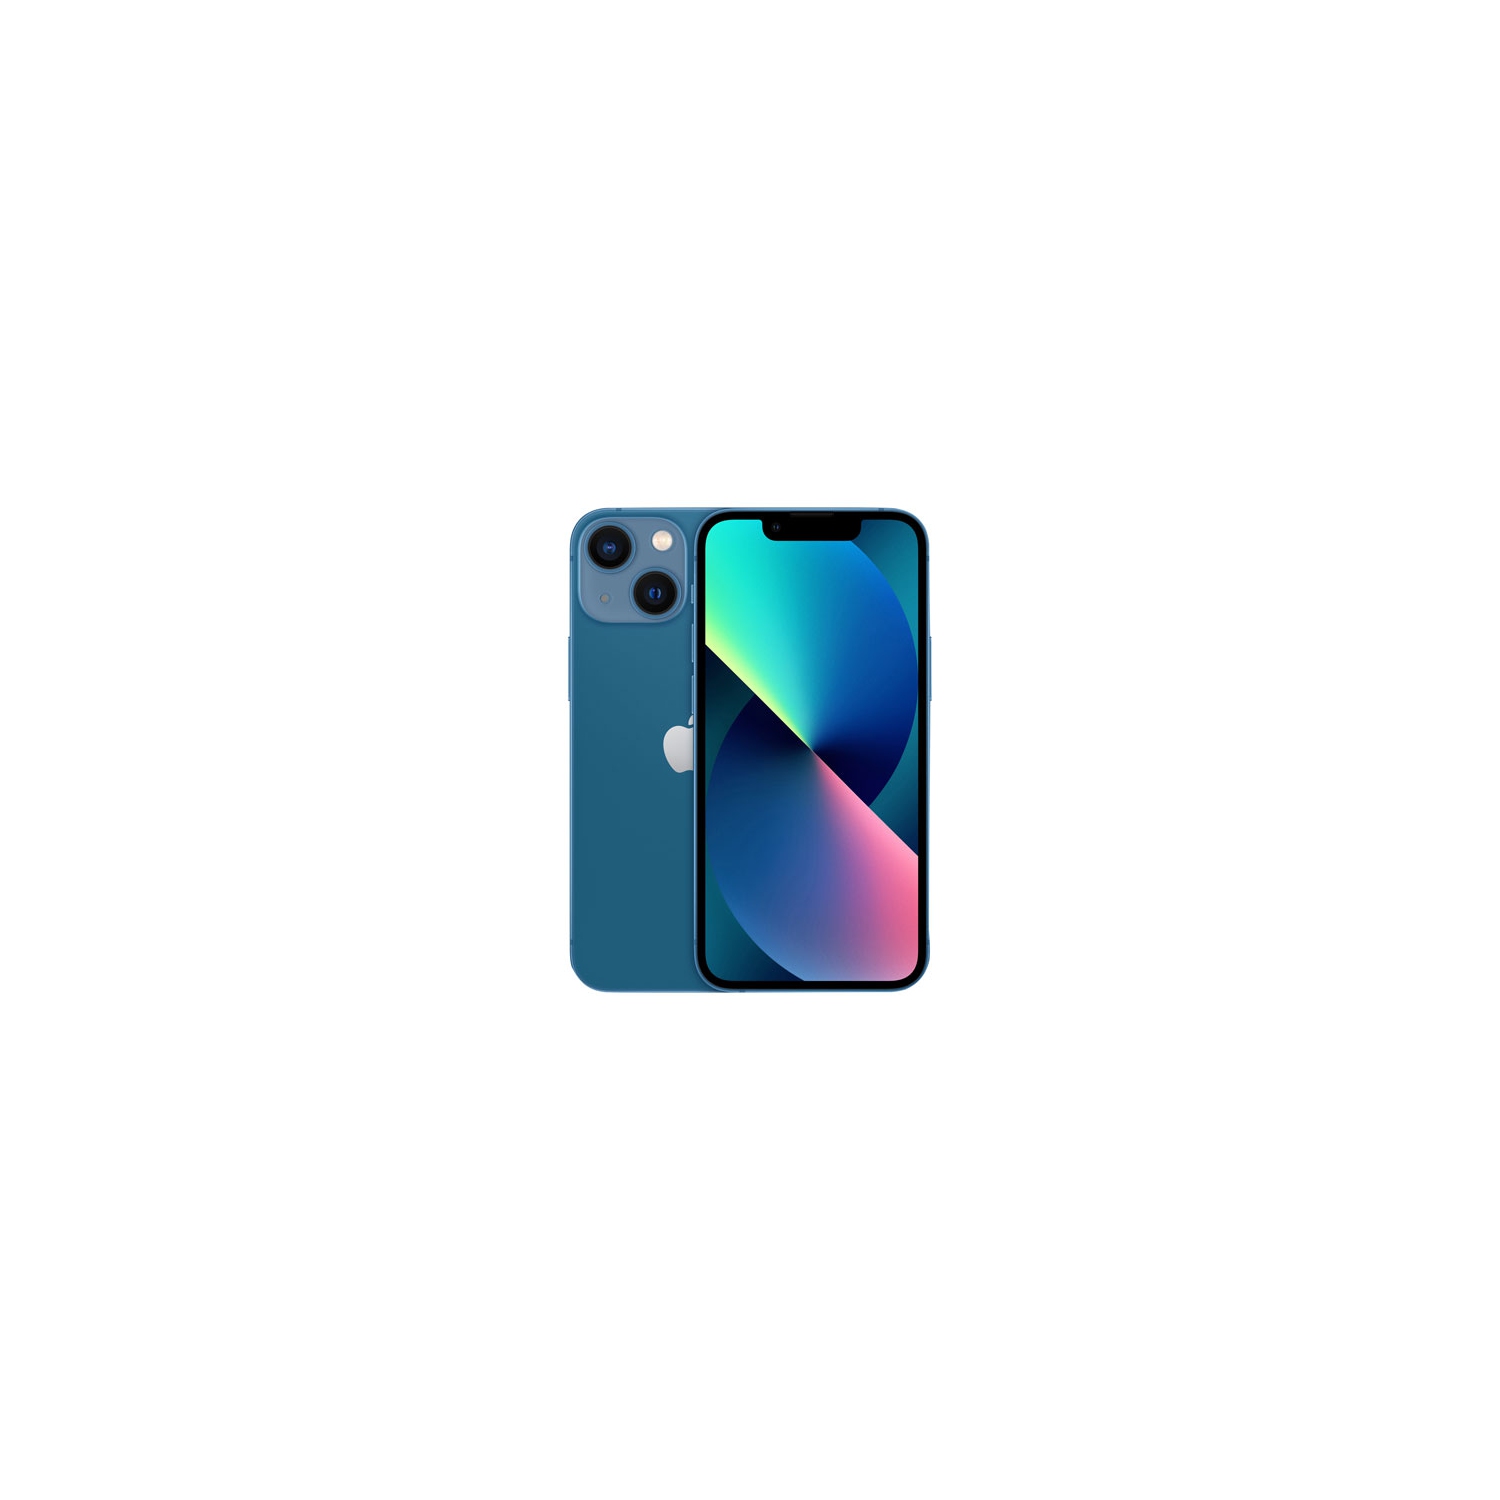 Apple iPhone 13 mini 256GB - Blue - Unlocked - Refurbished